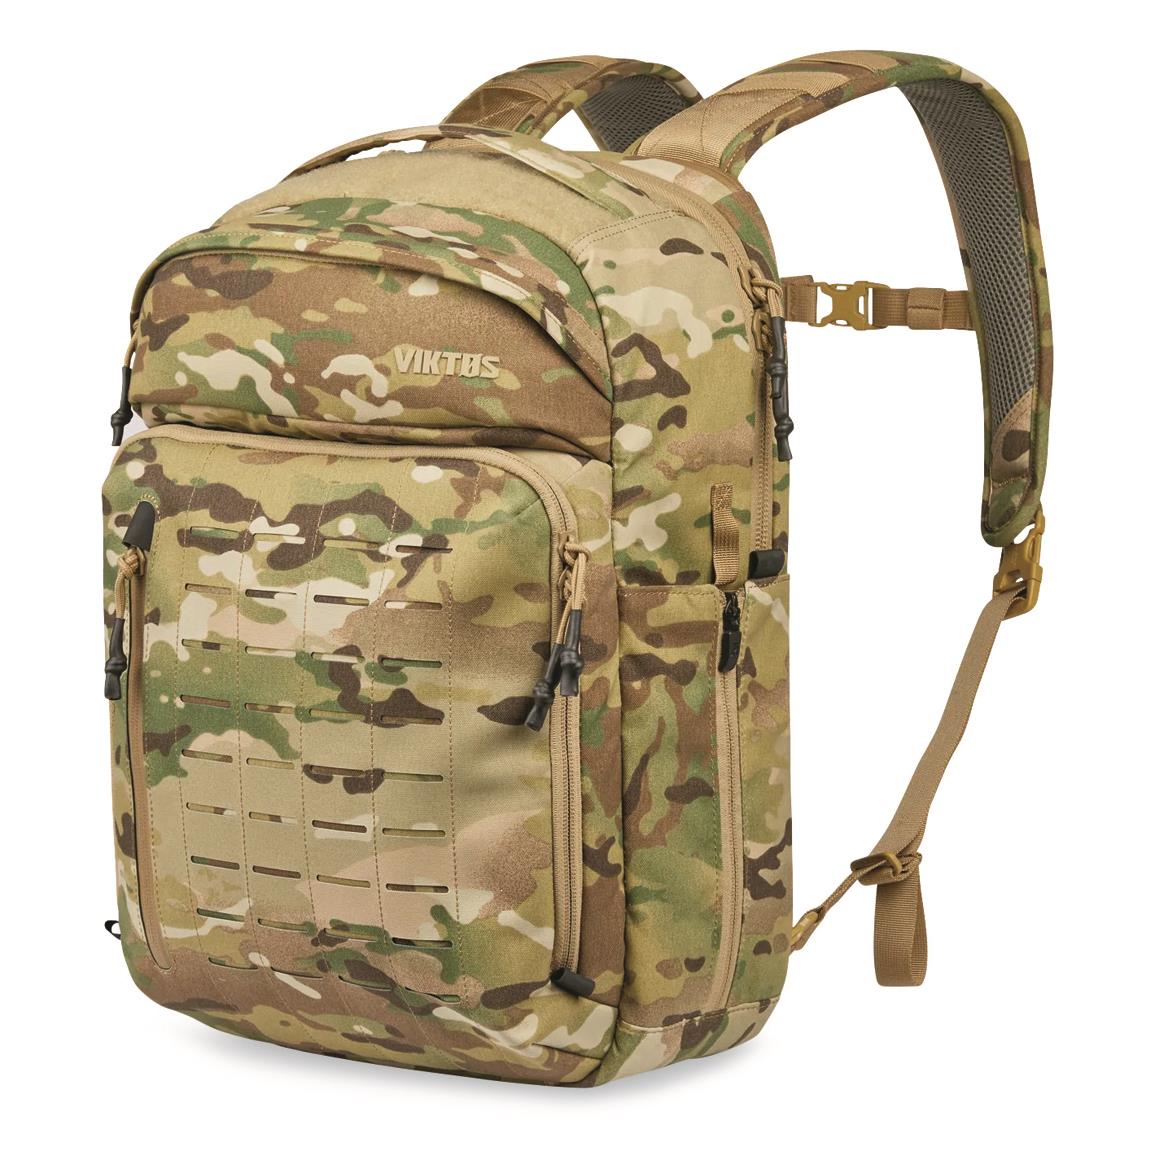 Viktos Perimeter 25L Backpack, Multicam